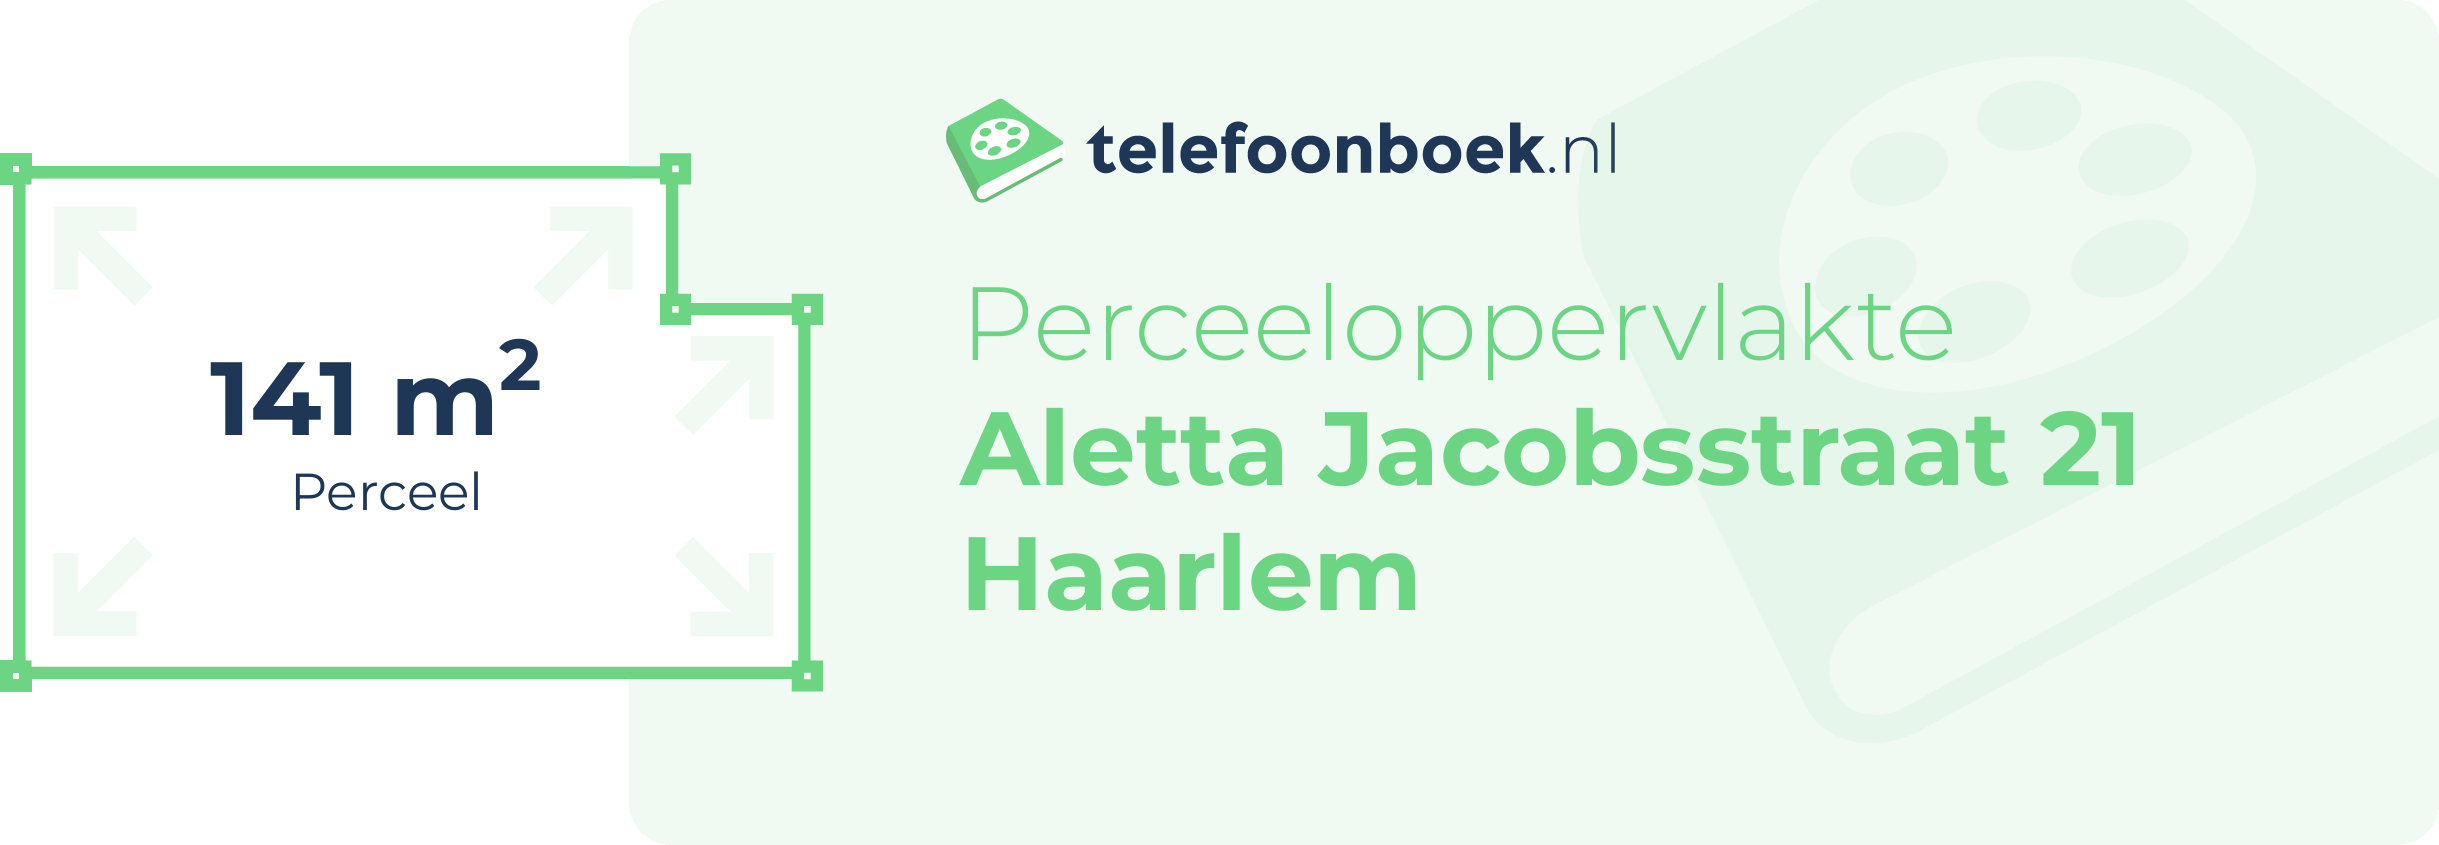 Perceeloppervlakte Aletta Jacobsstraat 21 Haarlem